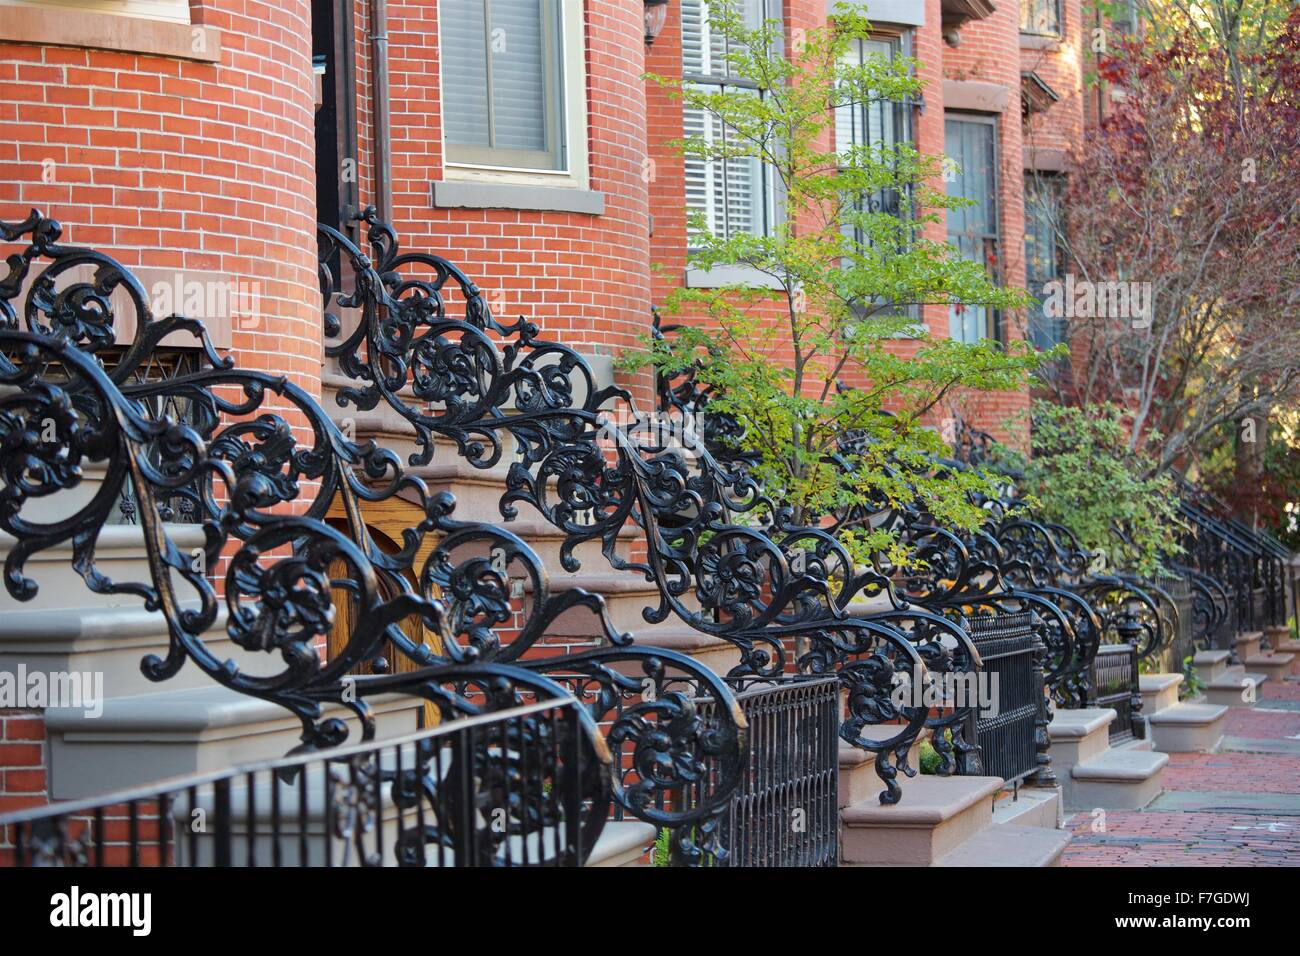 Autumn in the beautiful and historic South End neighborhood of Boston, Massachusetts. Stock Photo